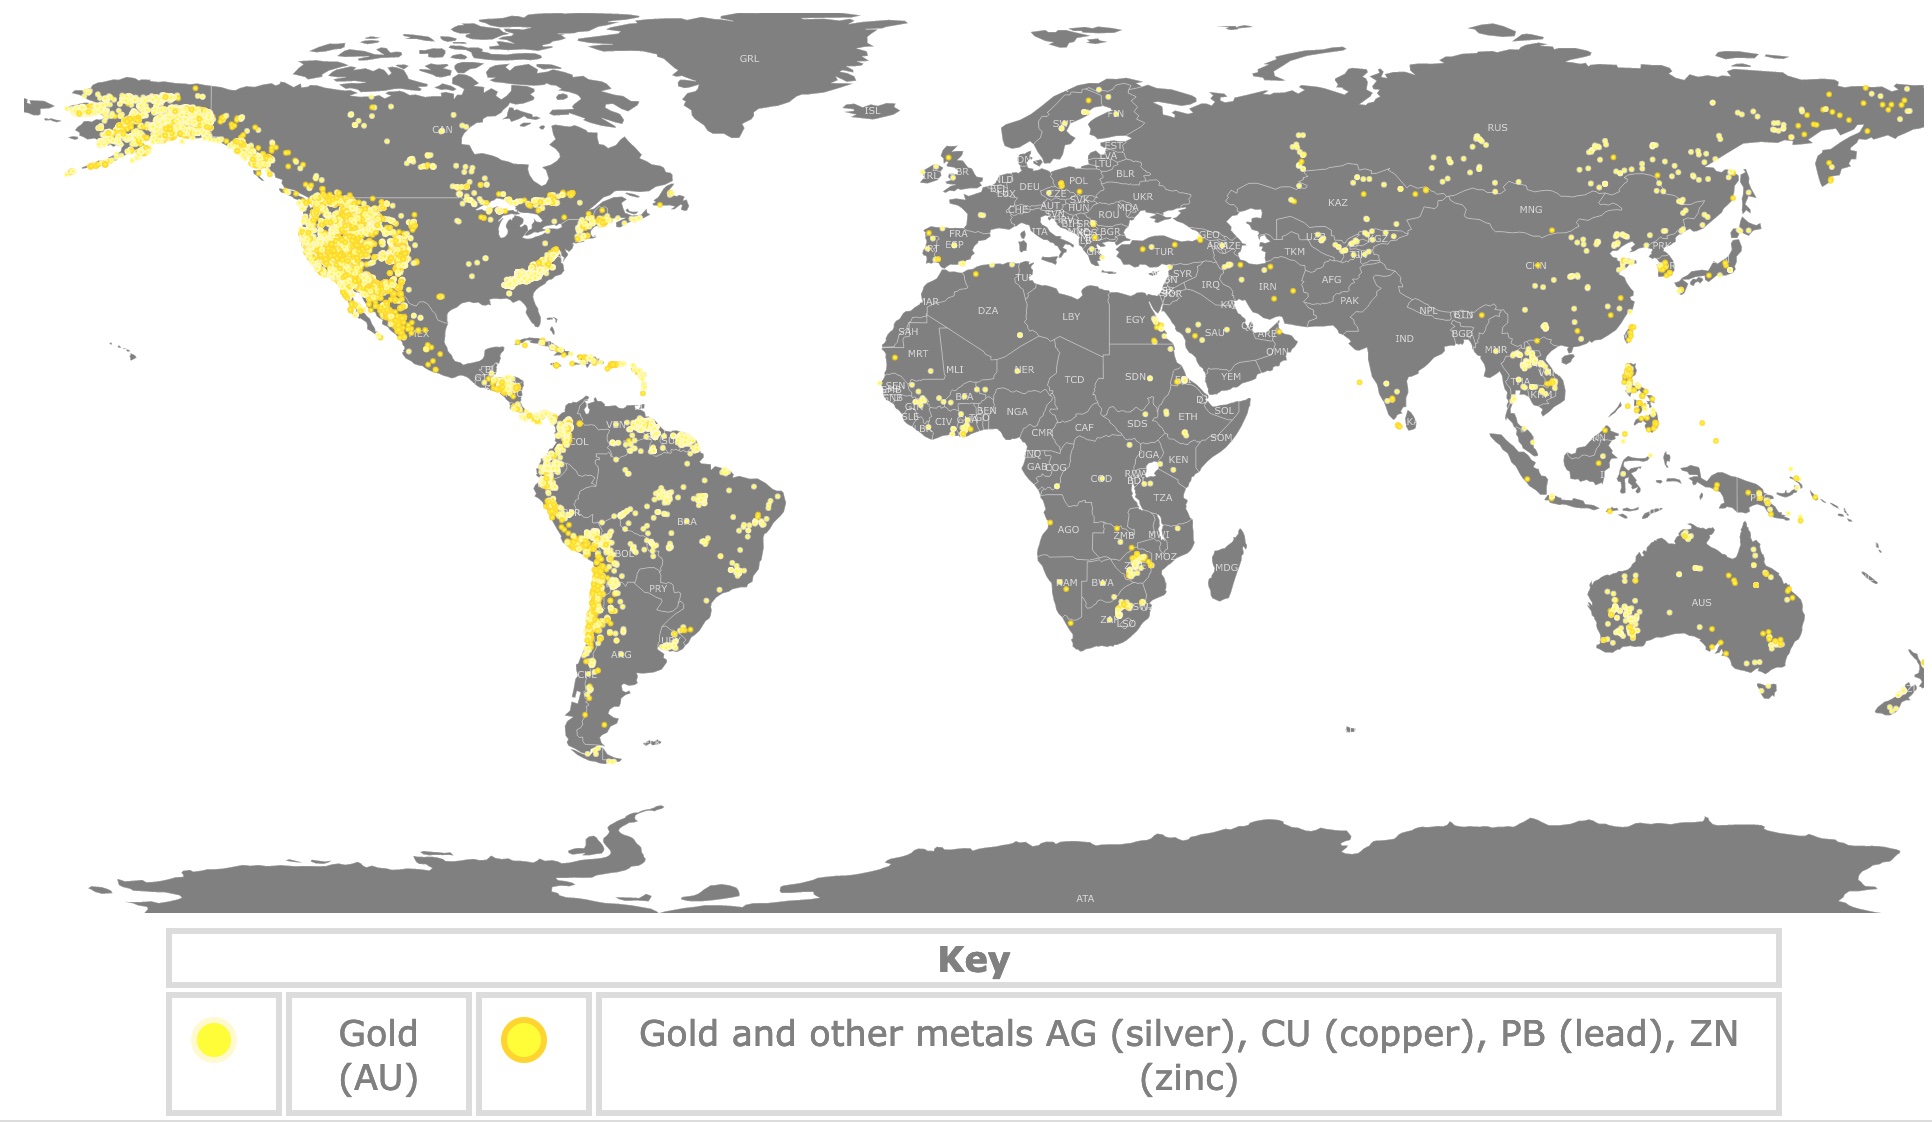 Map of Gold Deposits worldwide